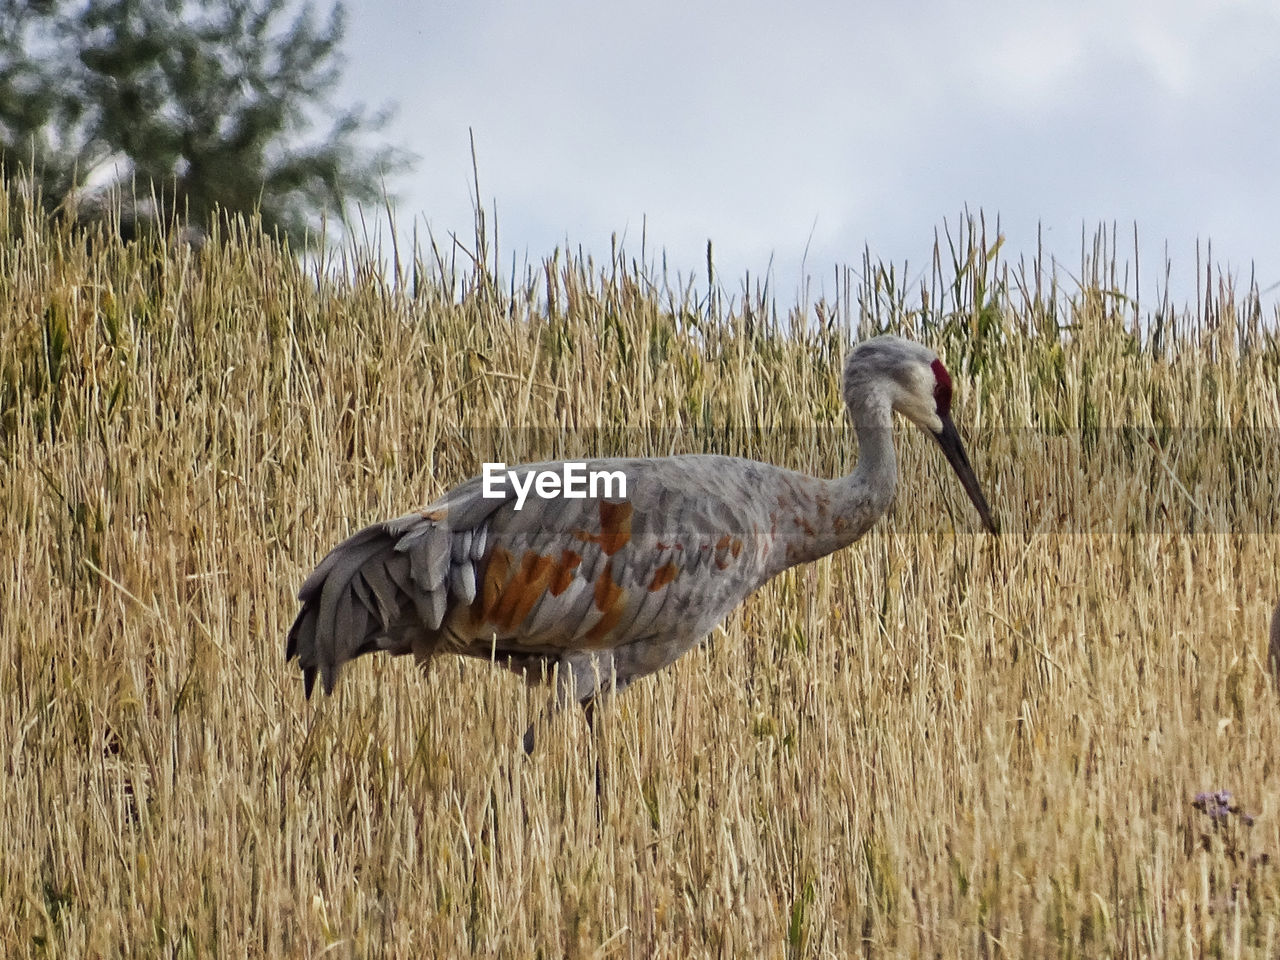 Wildlife Sandhill Crane Bird Animal Themes Sky Grass Animal Neck Beak